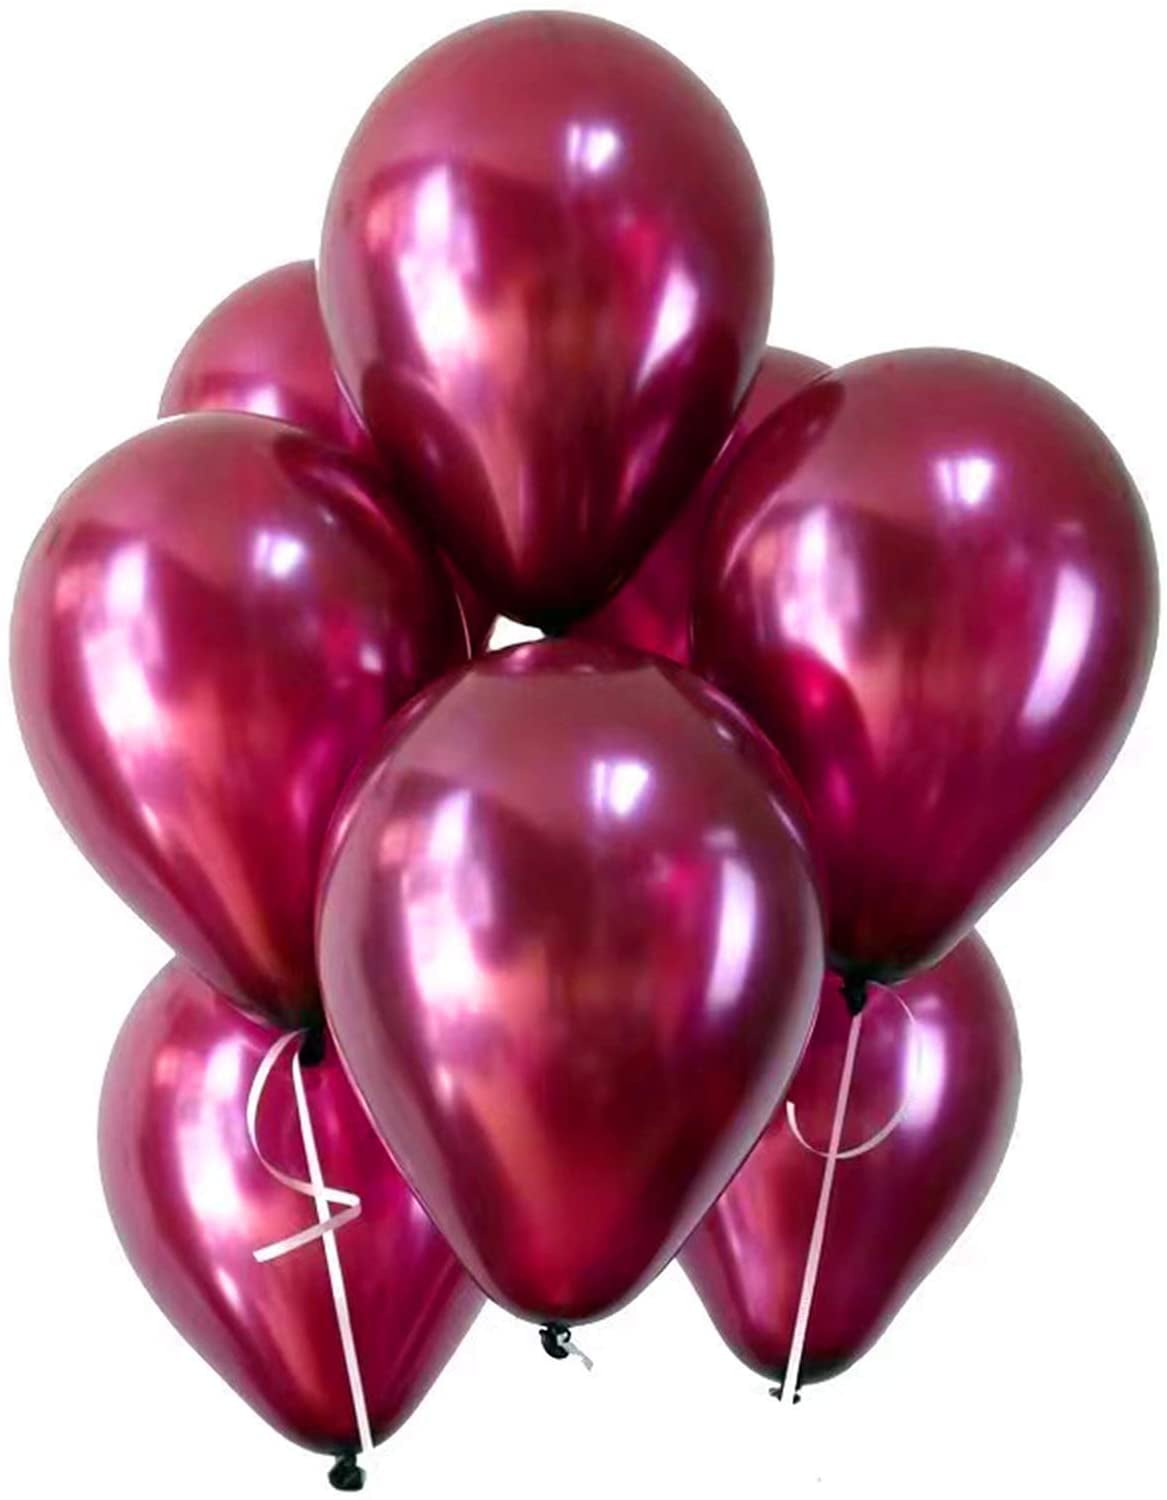 12'' Metallic Latex Balloon Heart Shaped Birthday Wedding Party Decor 1-100PCS 